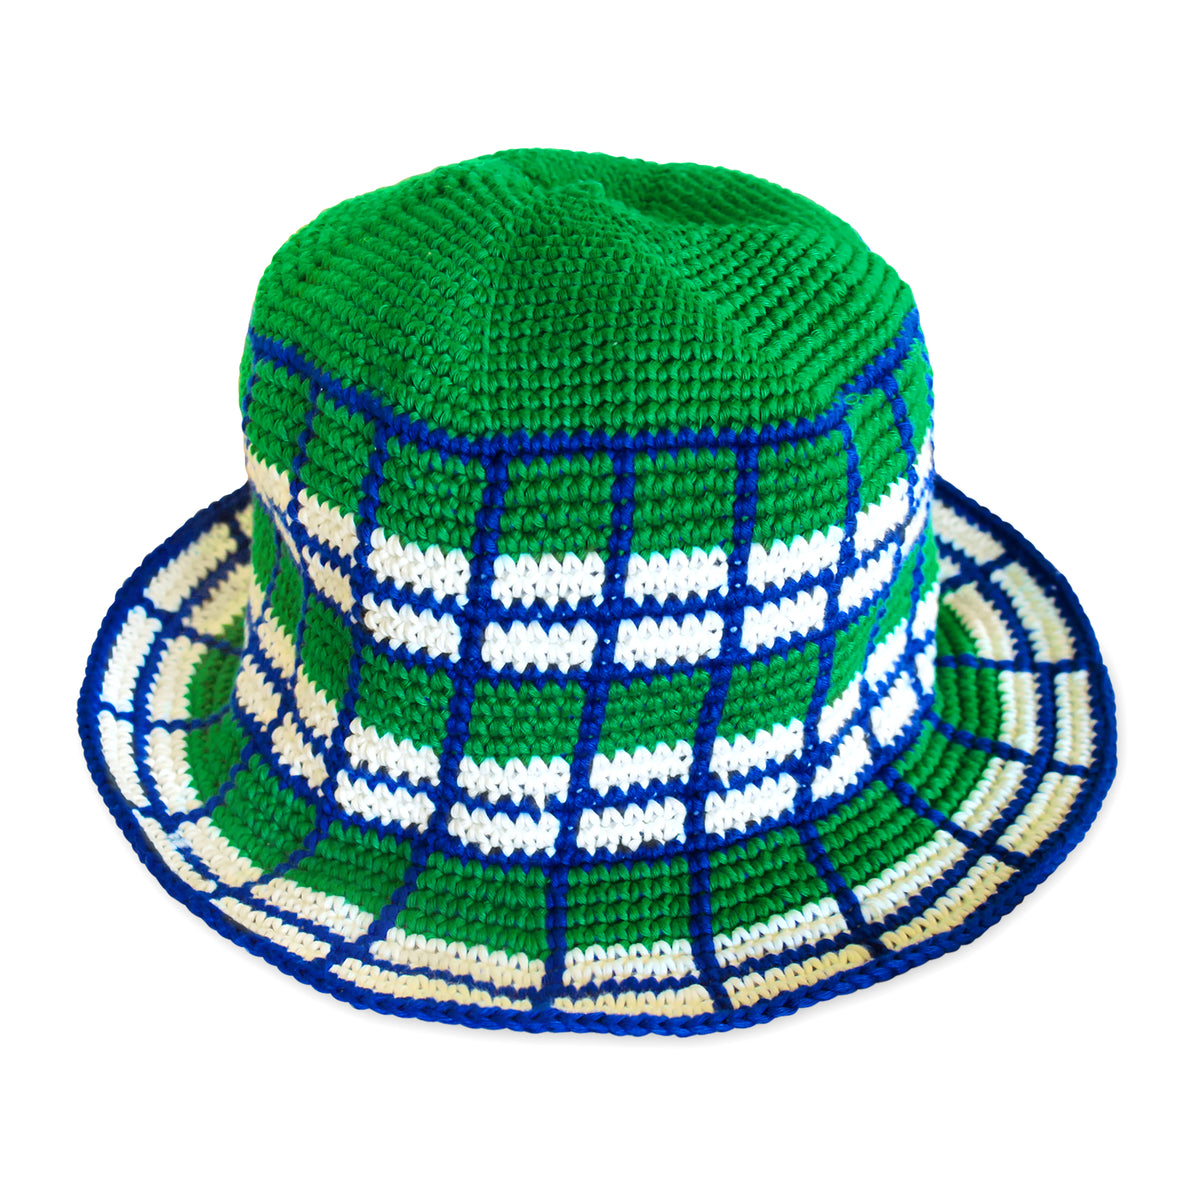 Wimbledon Plaid Crochet Knitted Beach Summer Hat in Blue and green